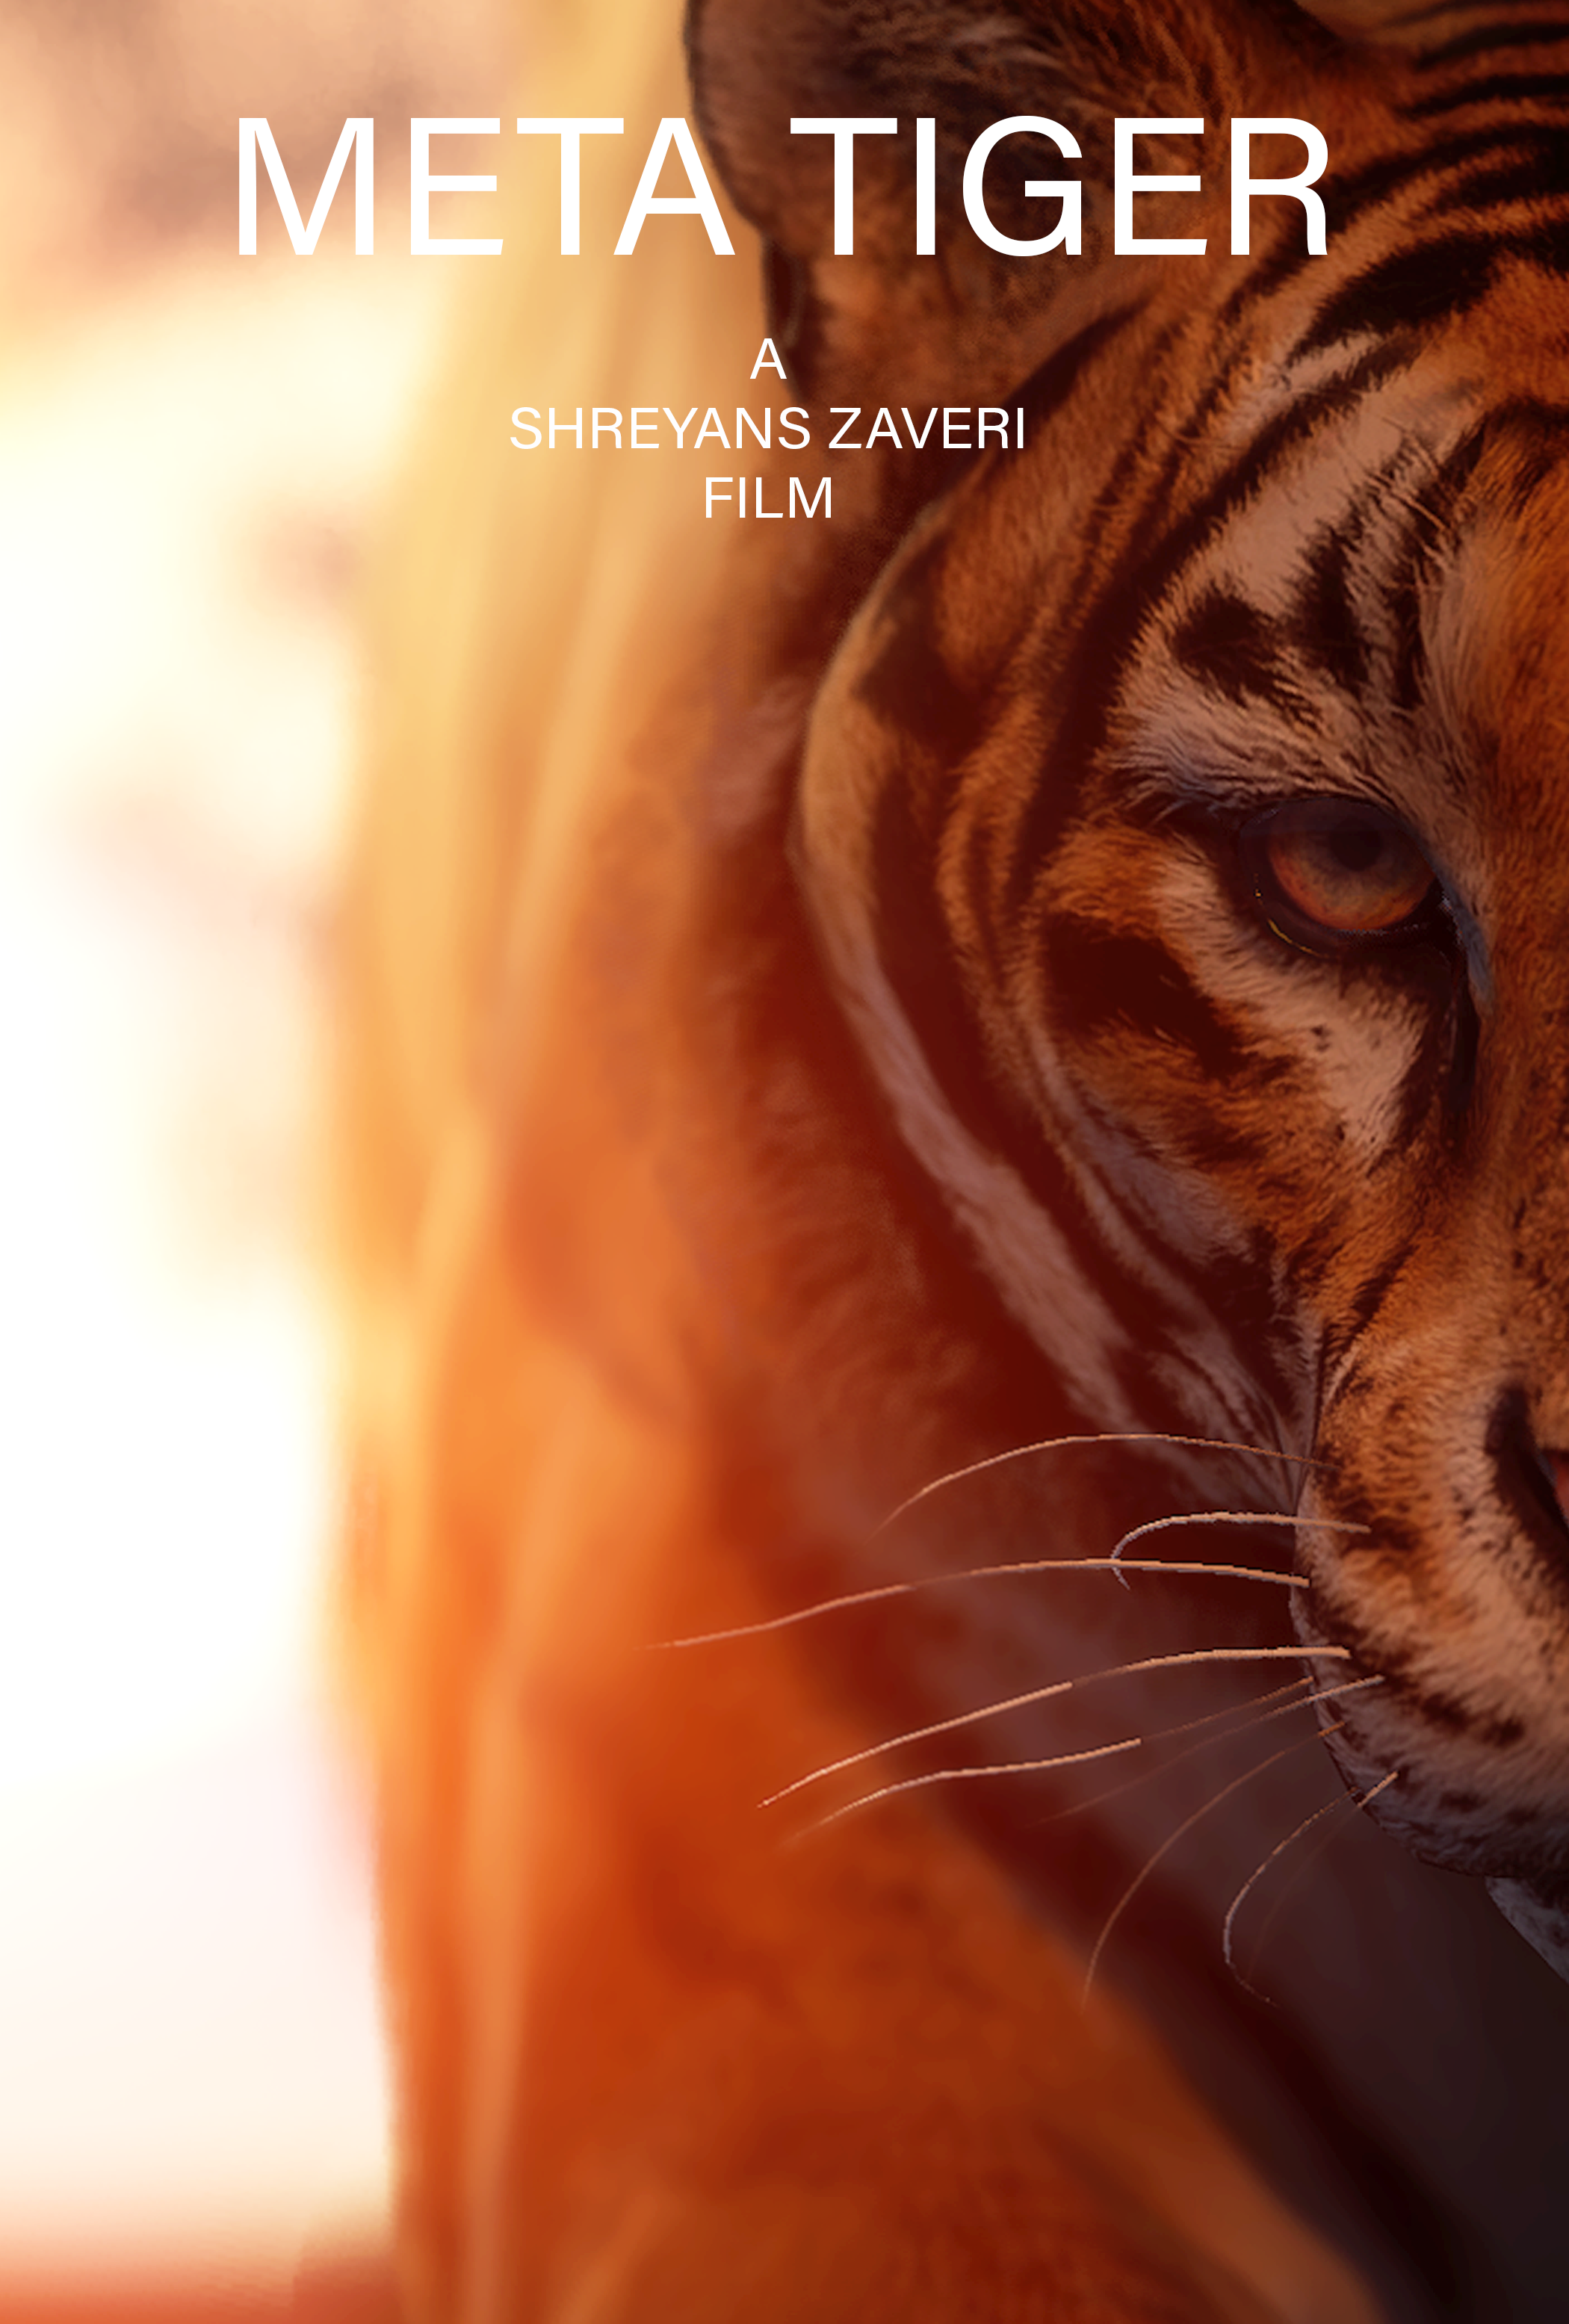 Shreyans Zaveri’s Short-film Meta Tiger Supports Tiger Conservation